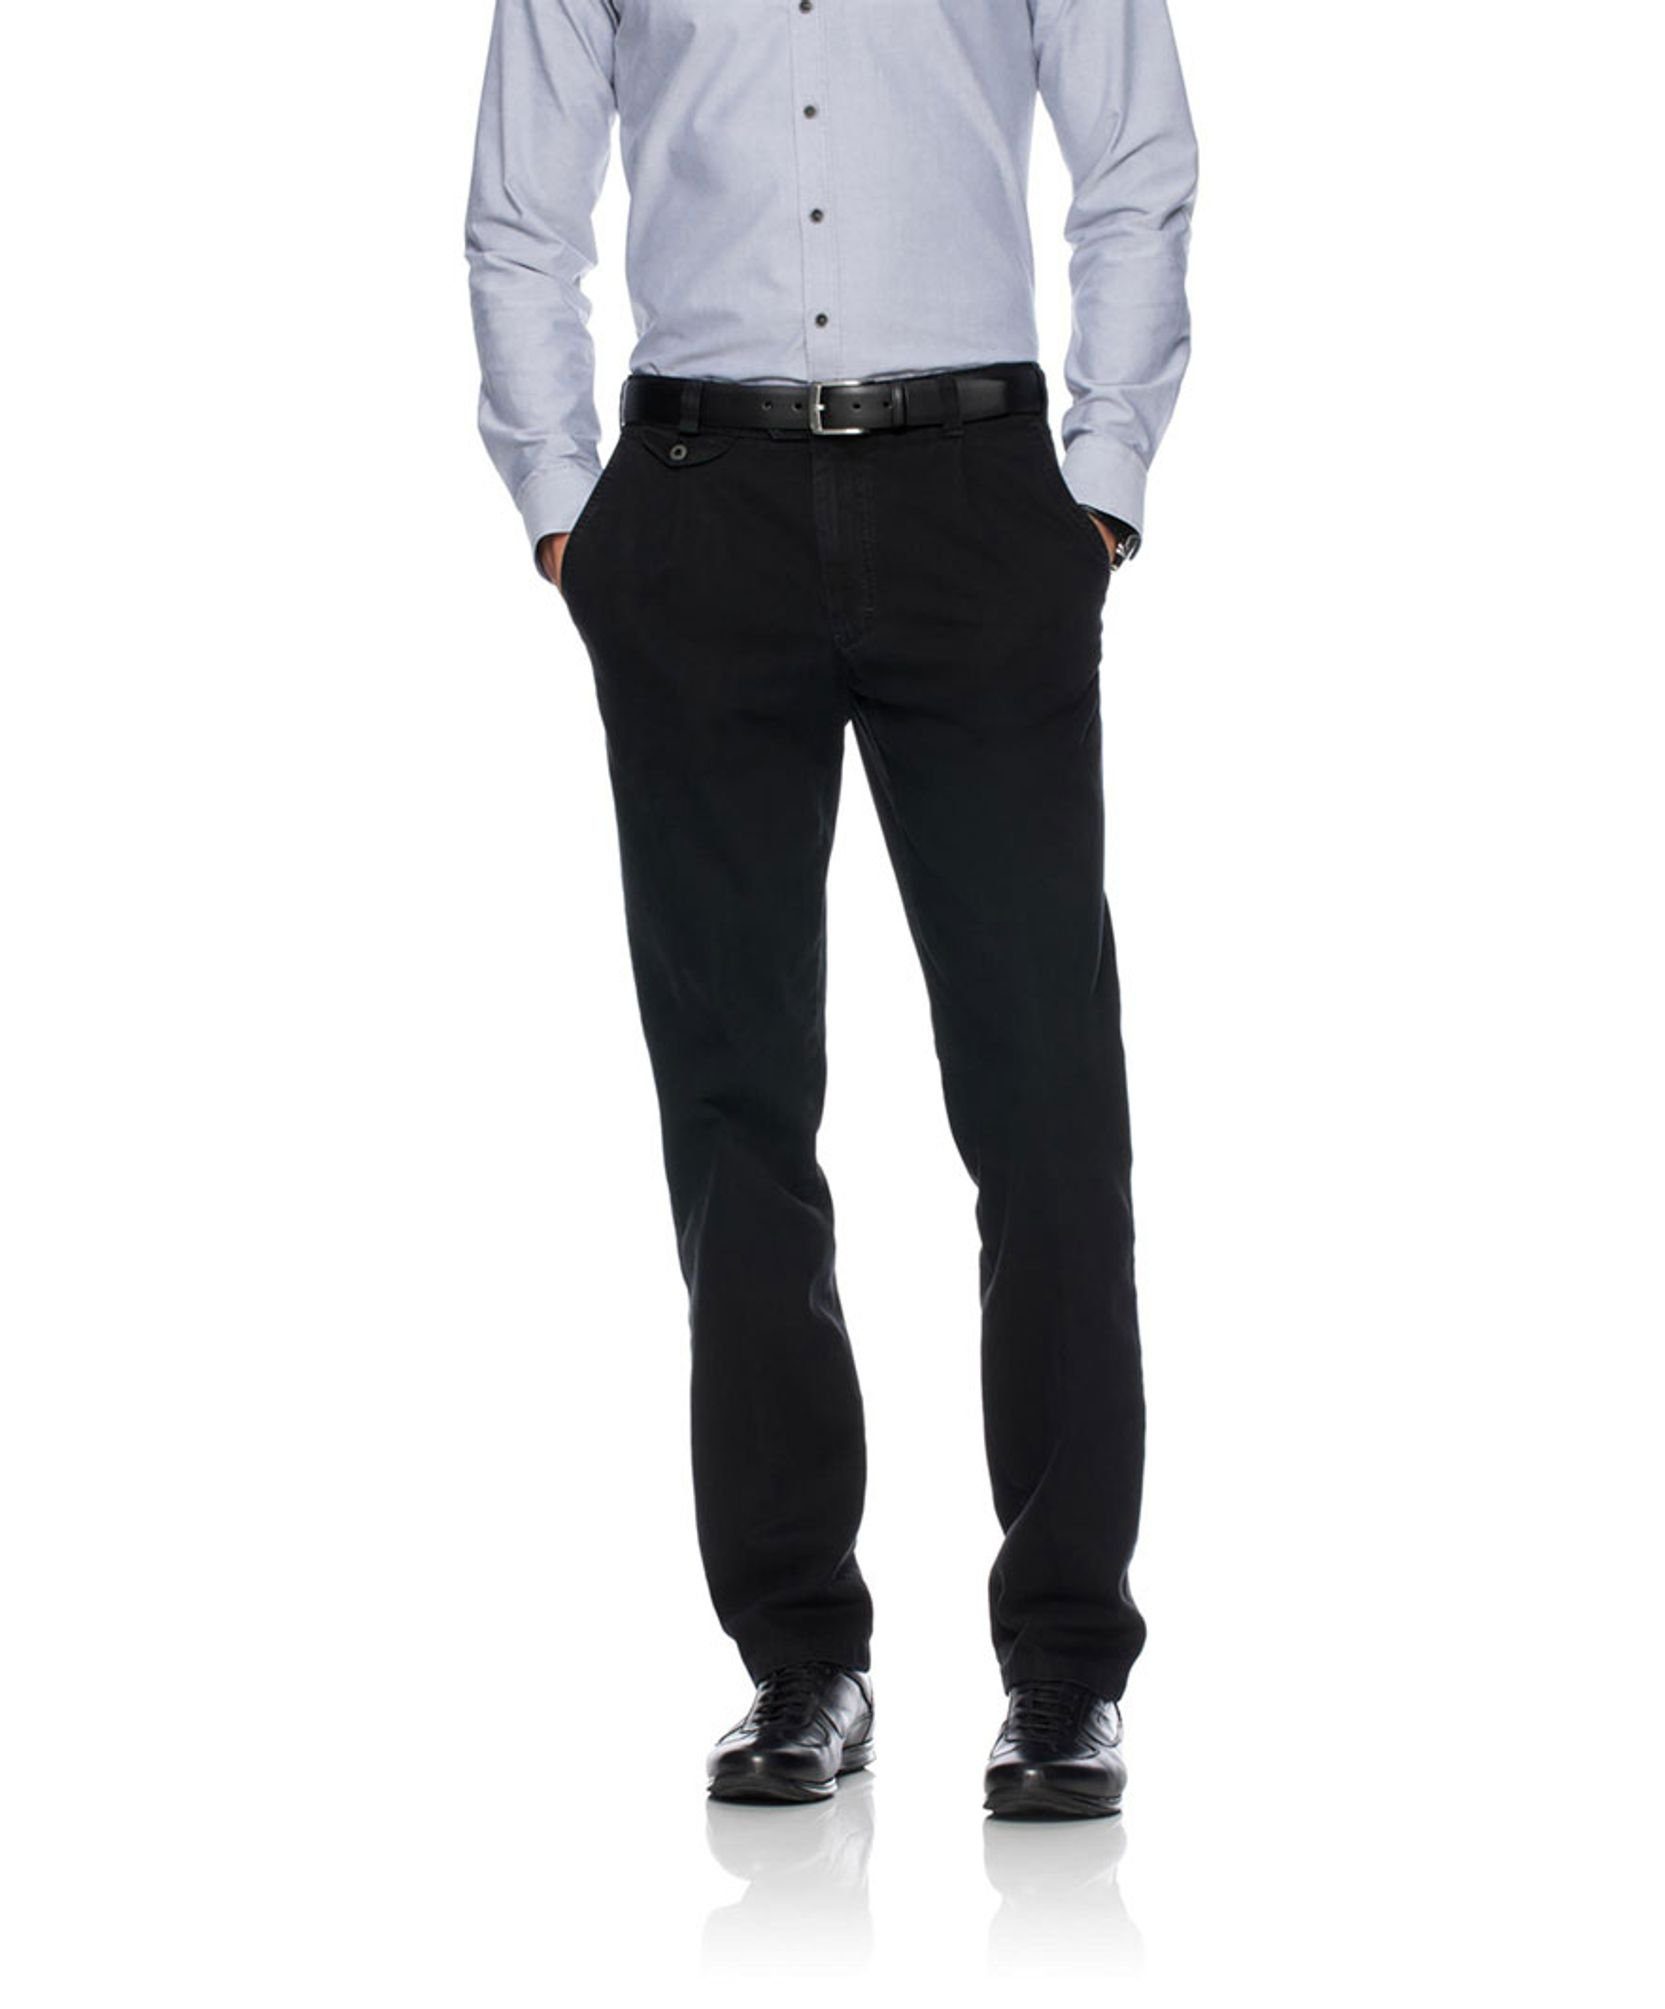 EUREX by BRAX 5-Pocket-Jeans 50-6900 Black Black (09) | Straight-Fit Jeans